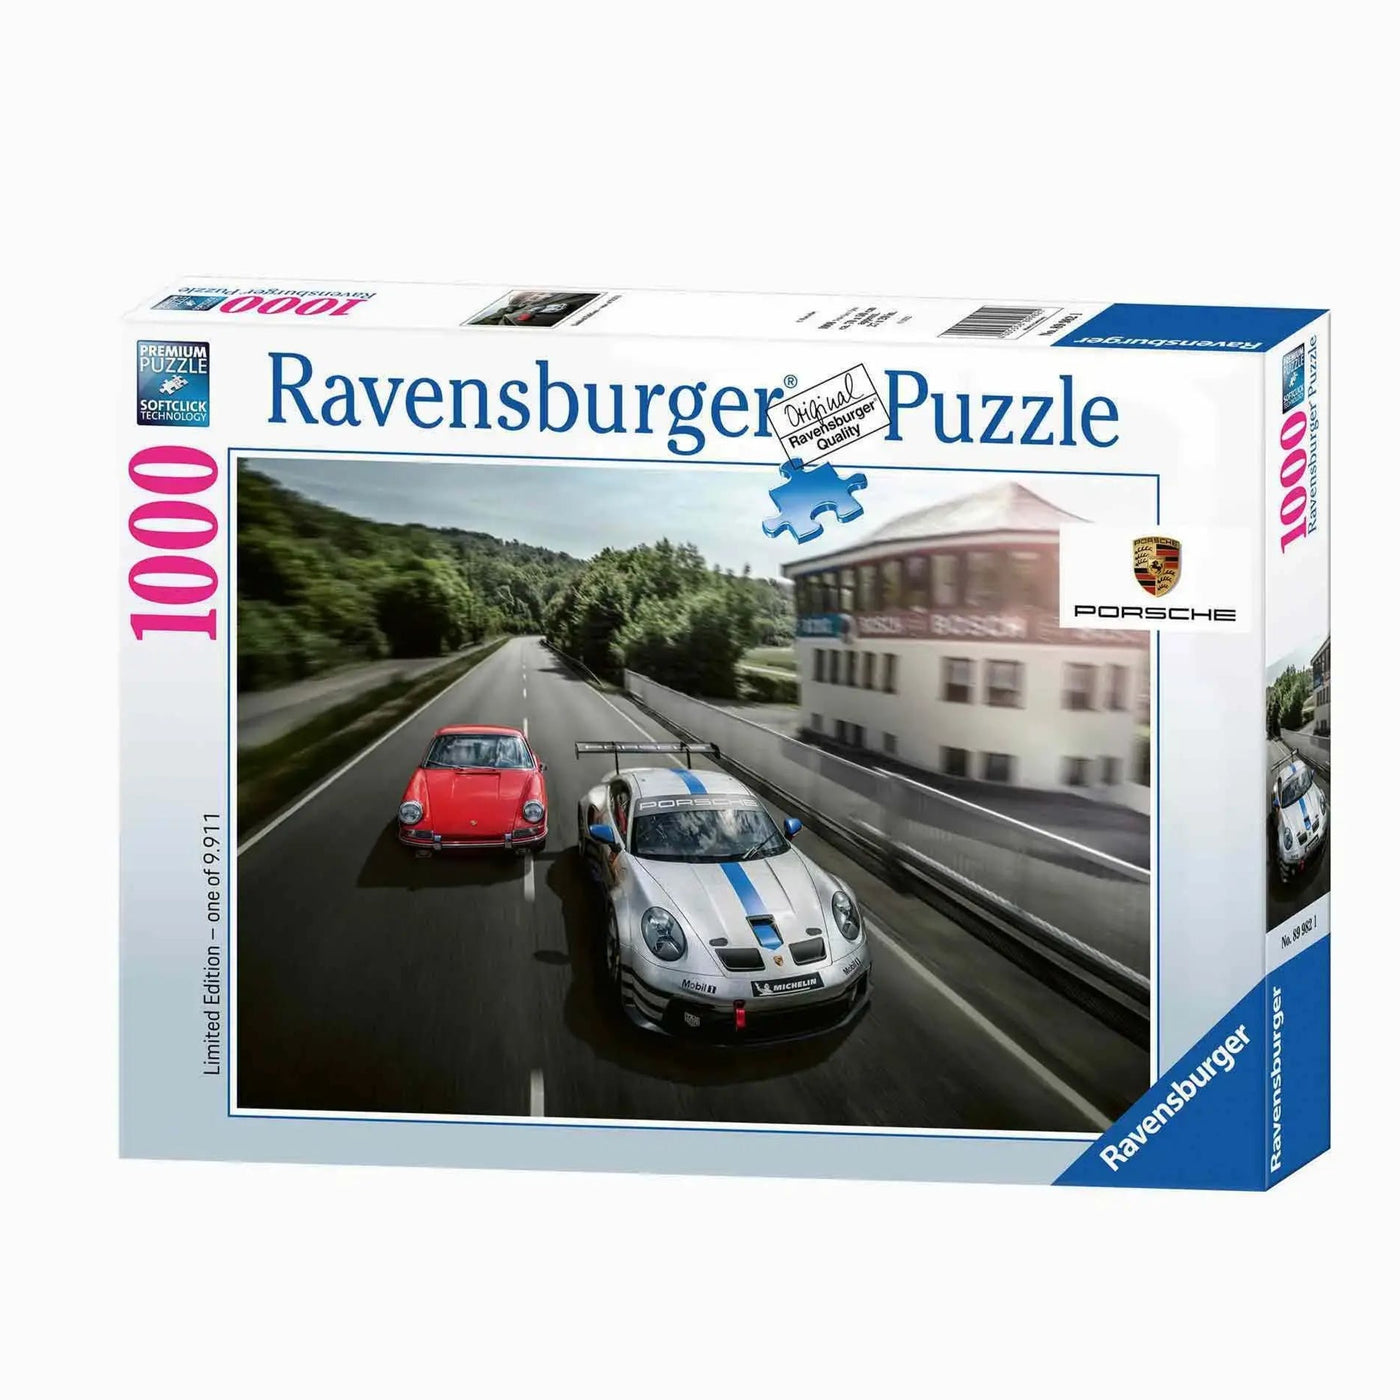 Porsche Ravensburger 2D Jigsaw Puzzle - Limited edition